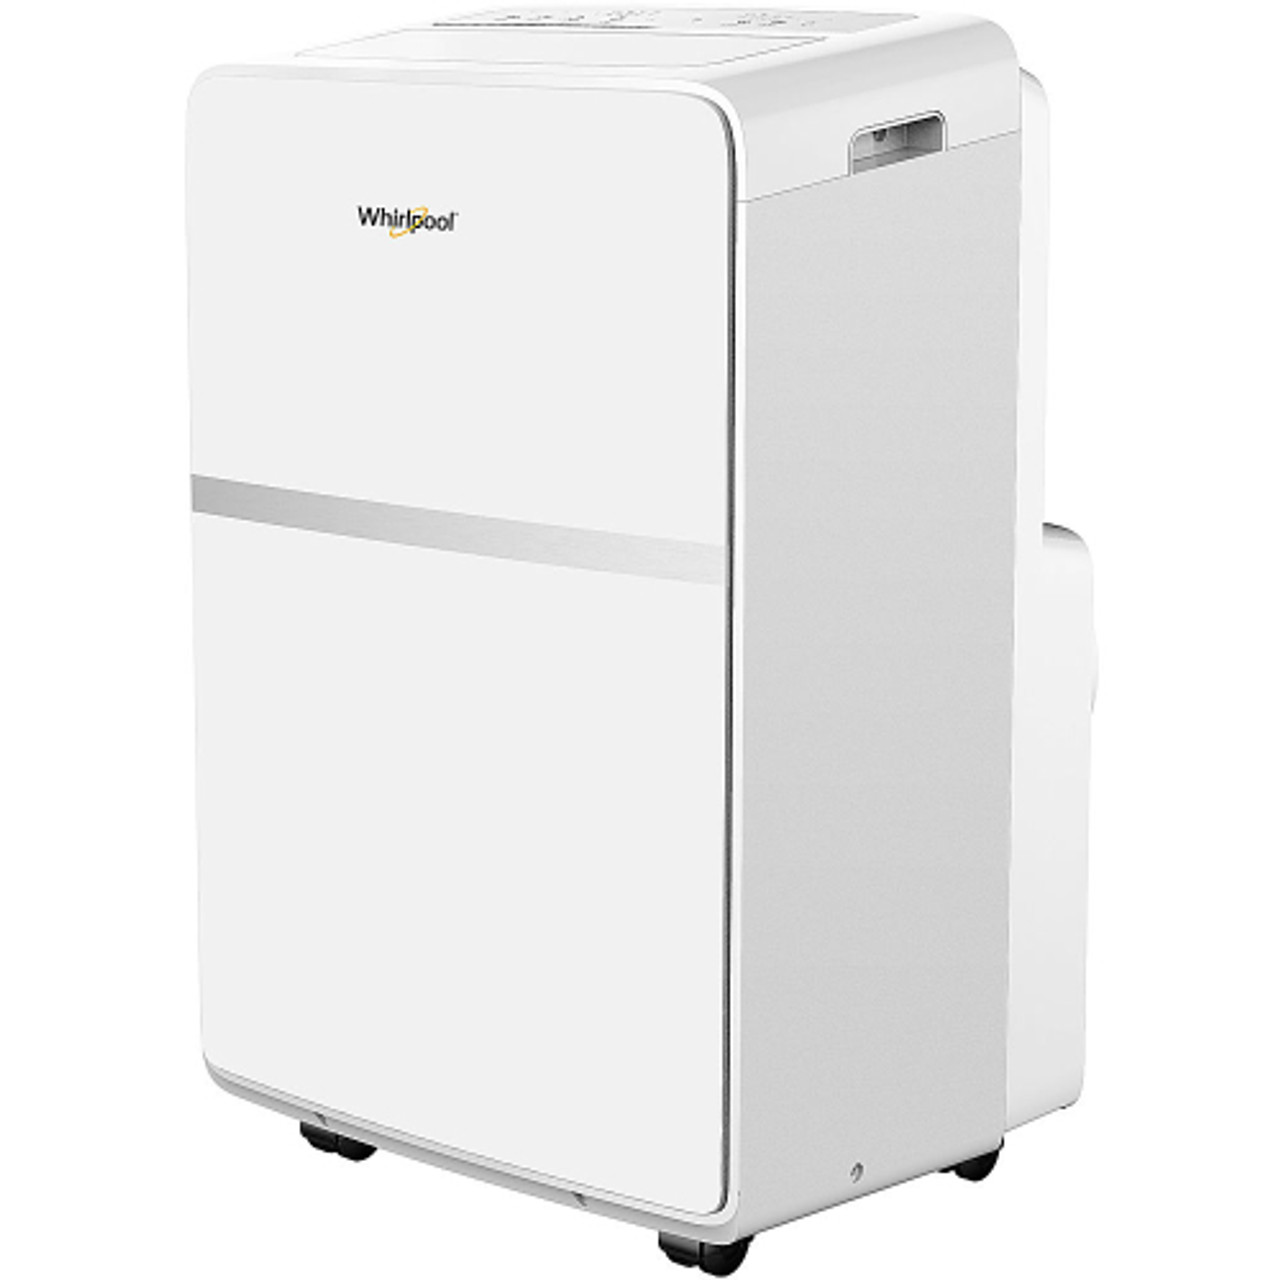 Whirlpool - 5500 BTU Portable Air Conditioner - White